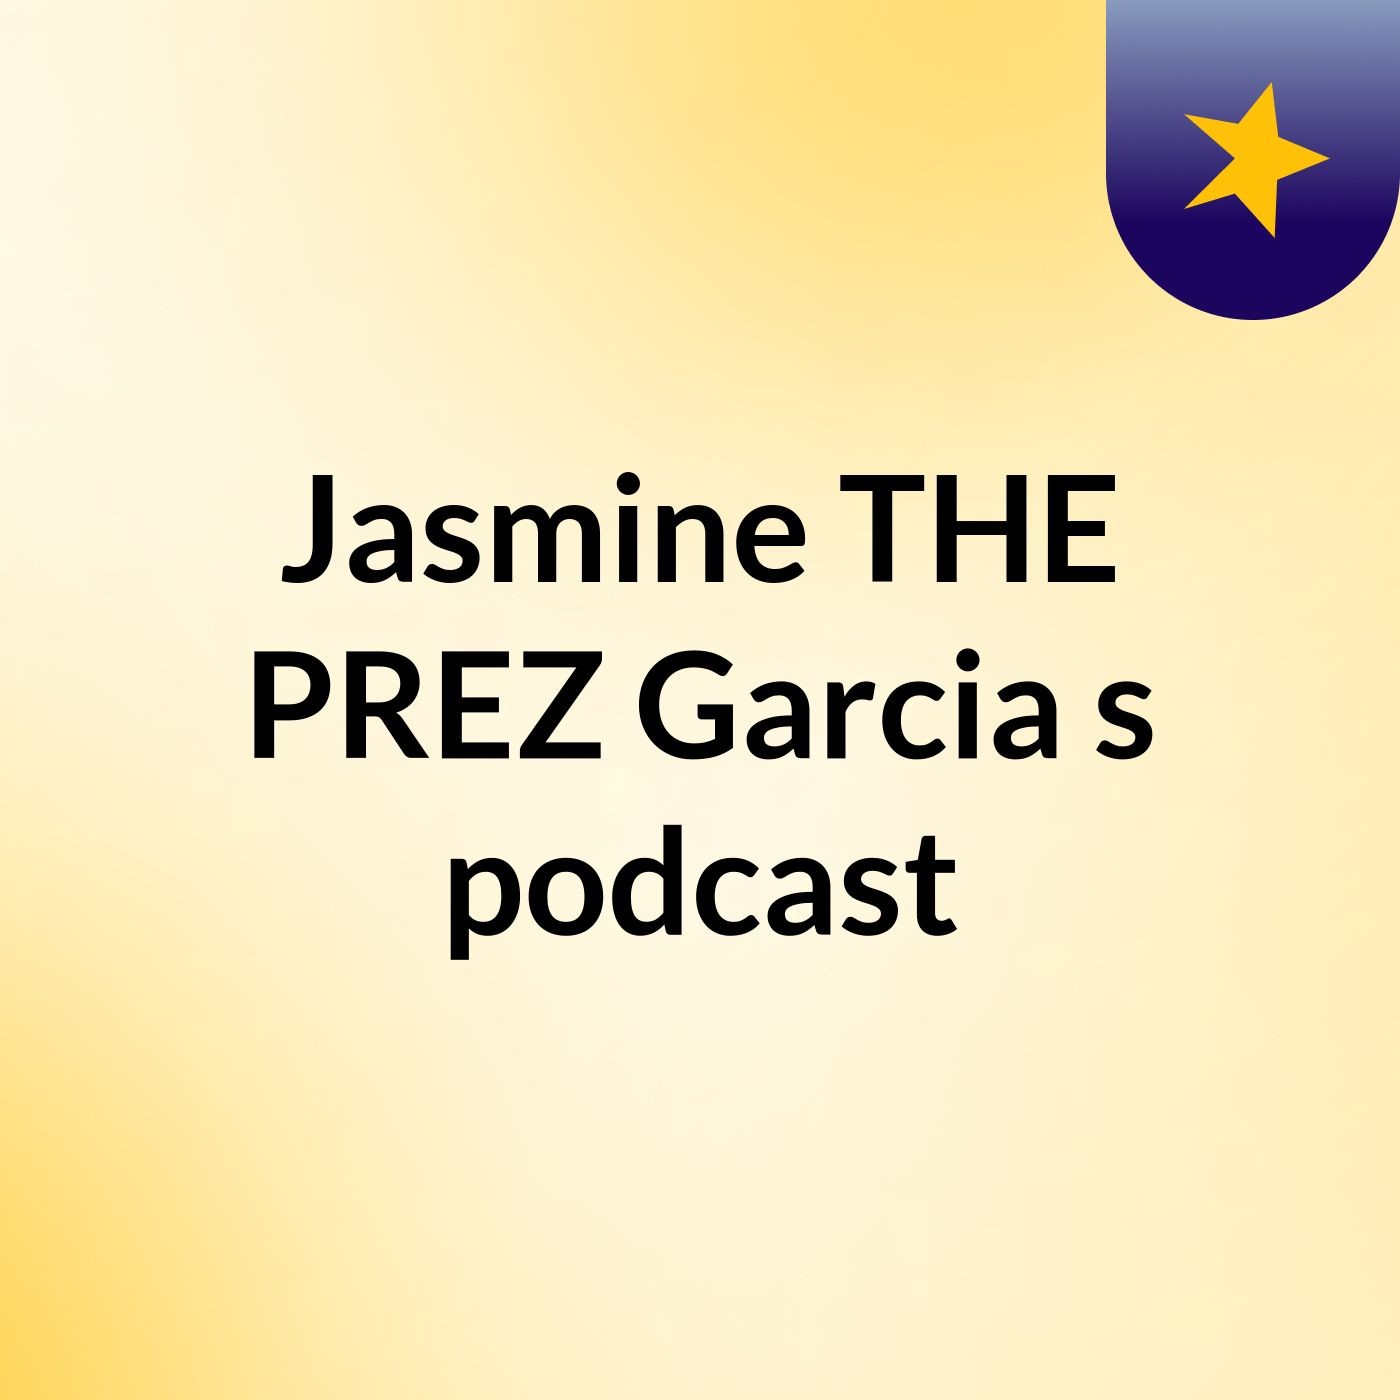 Jasmine THE PREZ Garcia's podcast